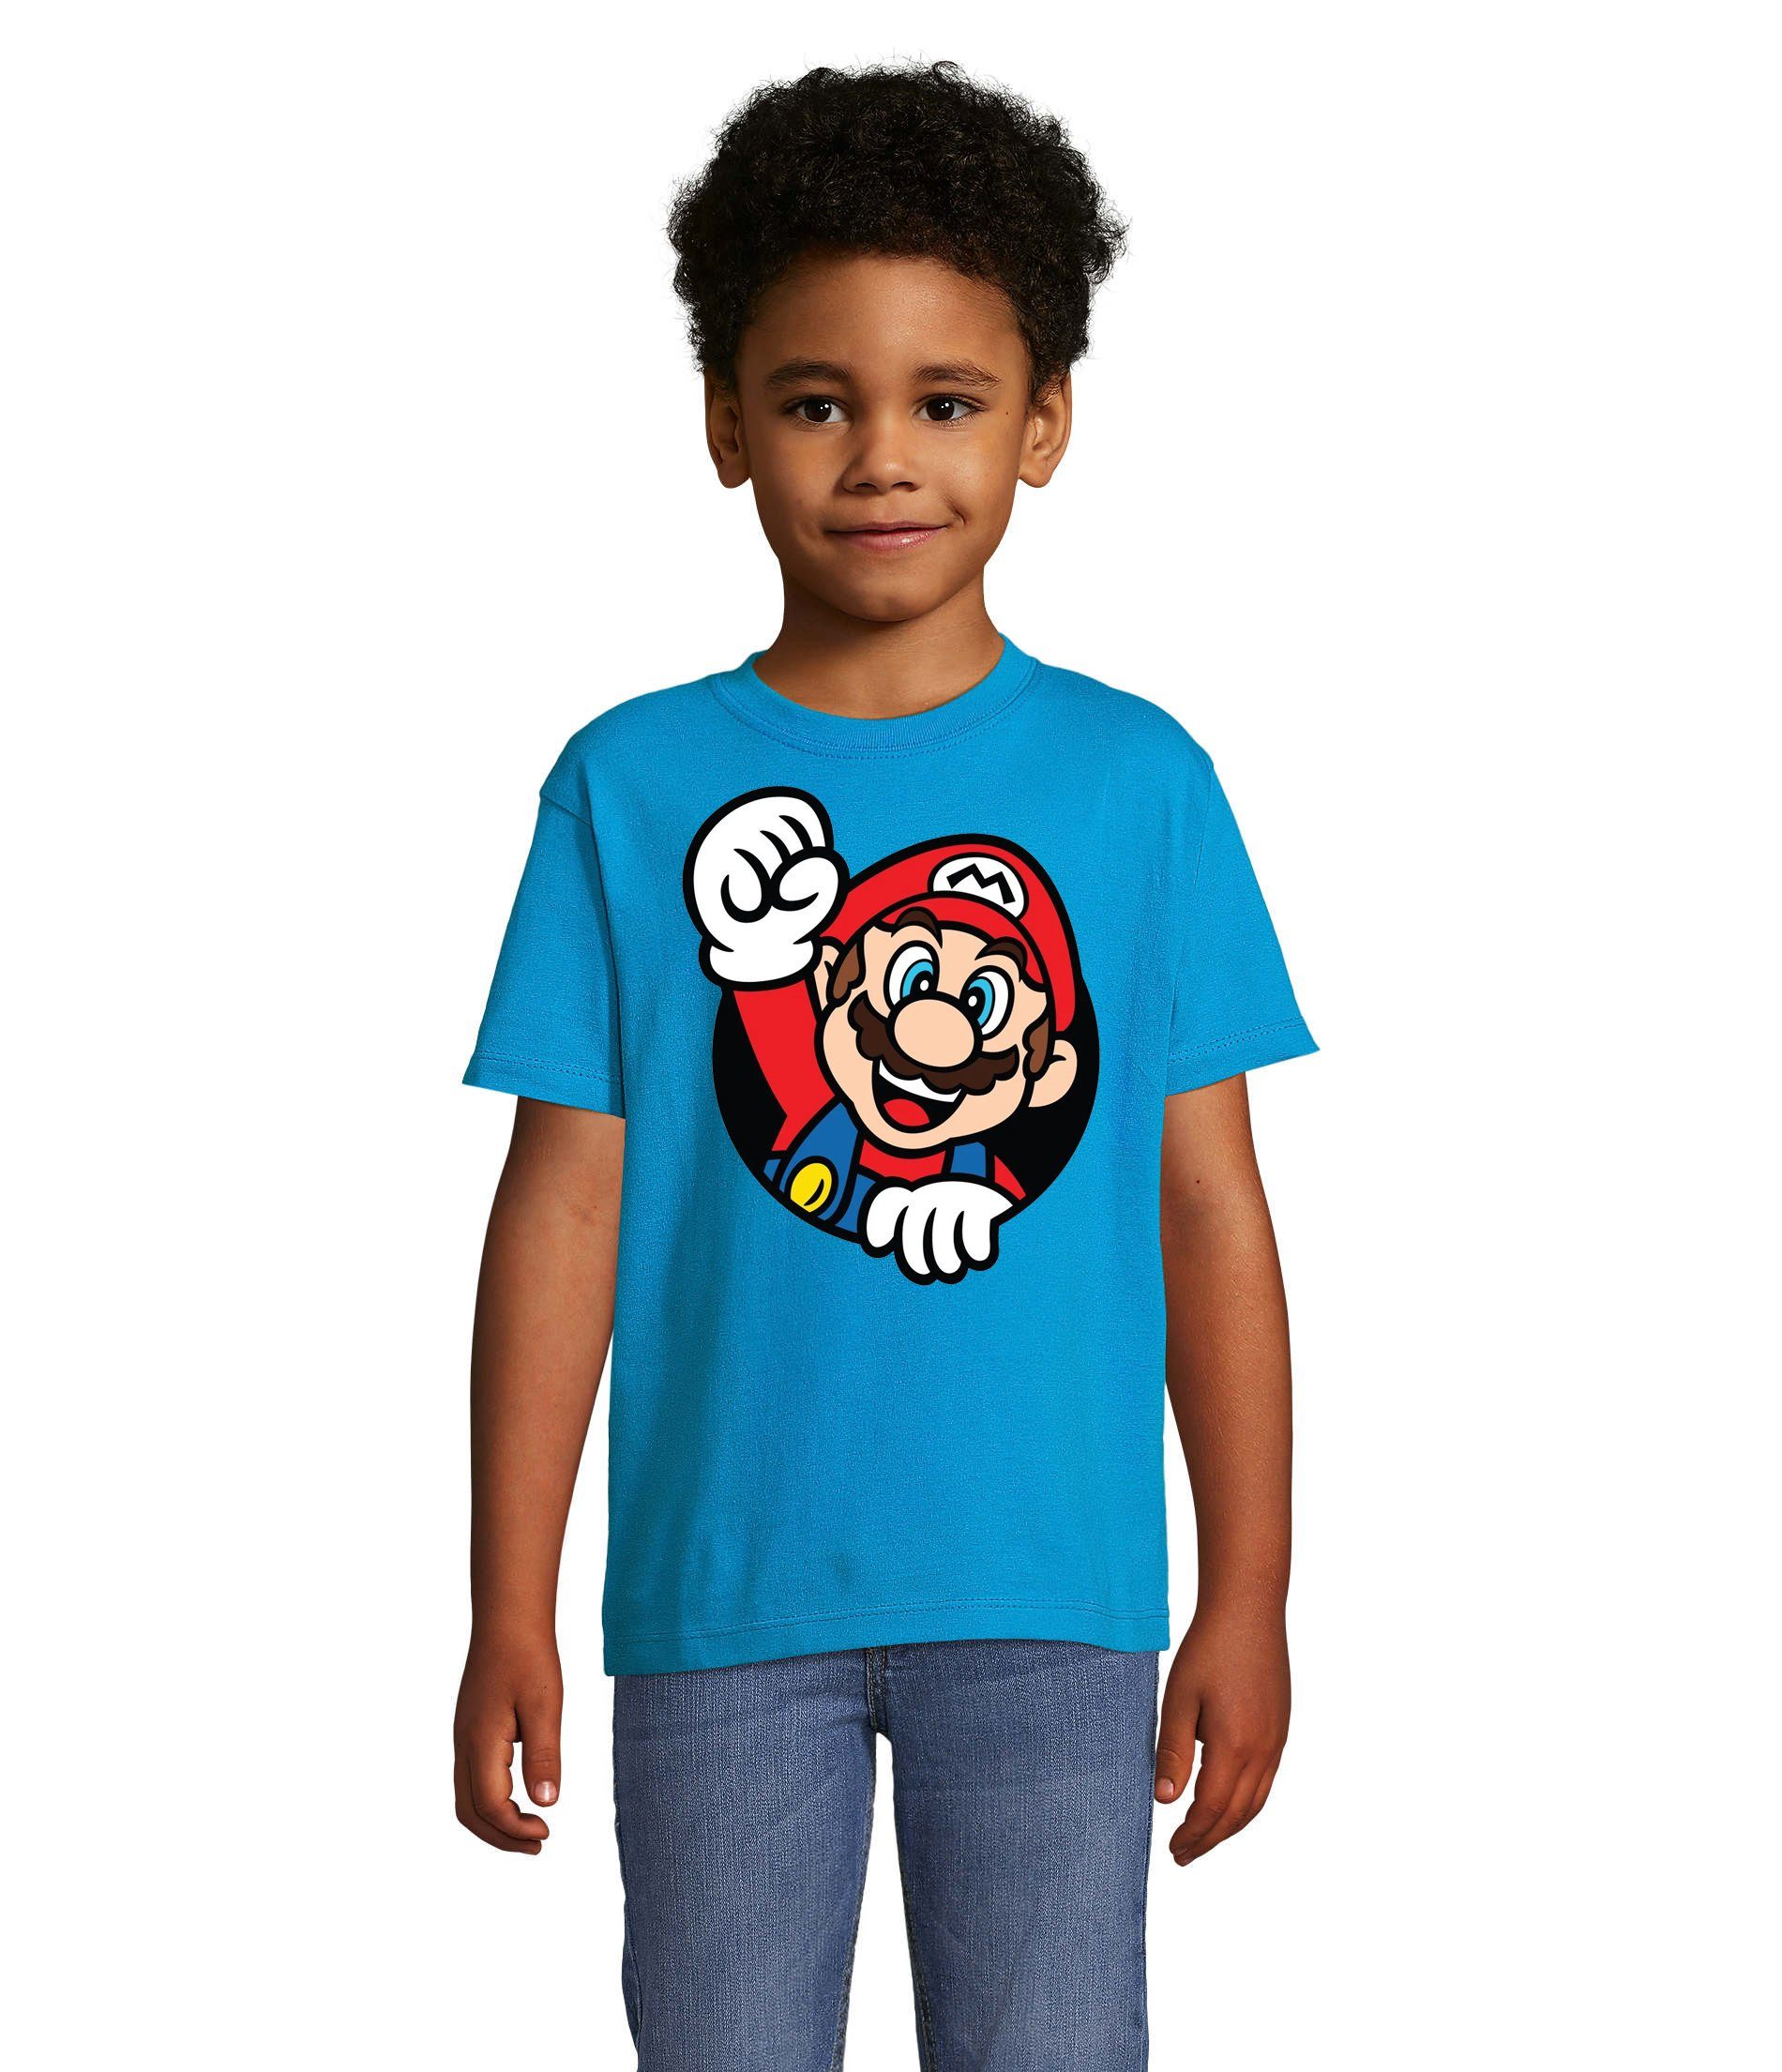 Blondie & Brownie T-Shirt Kinder Super Mario Faust Nerd Konsole Gaming Spiel Nintendo Konsole Blau